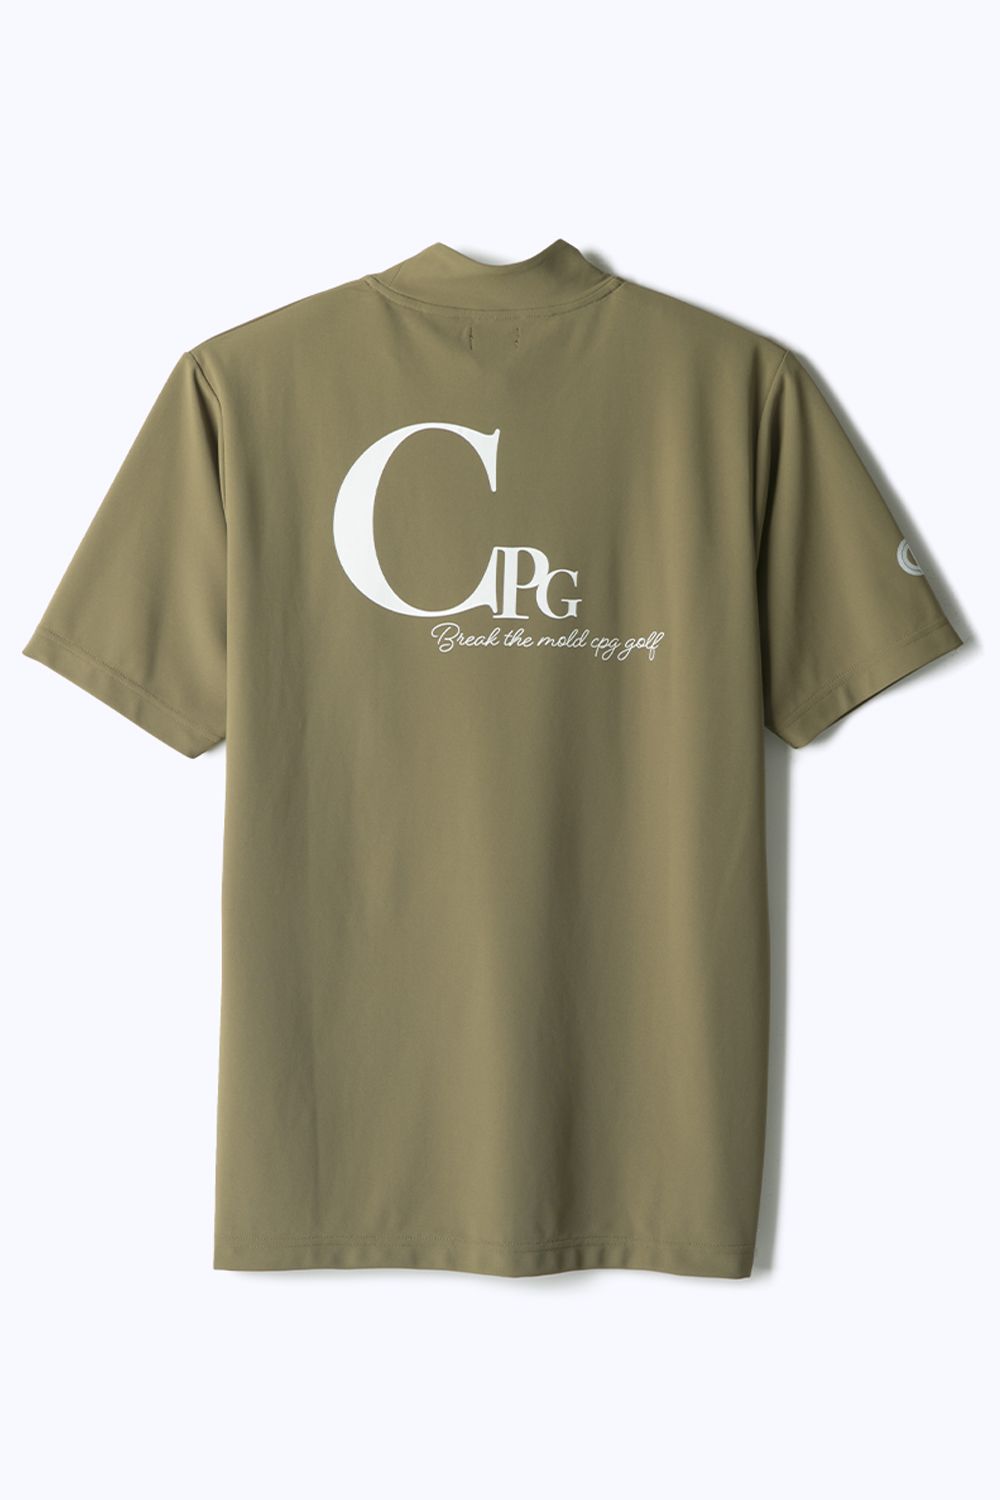 CPG GOLF - BACKLOGO MOCK NECK / バックロゴ 半袖モックネックシャツ 